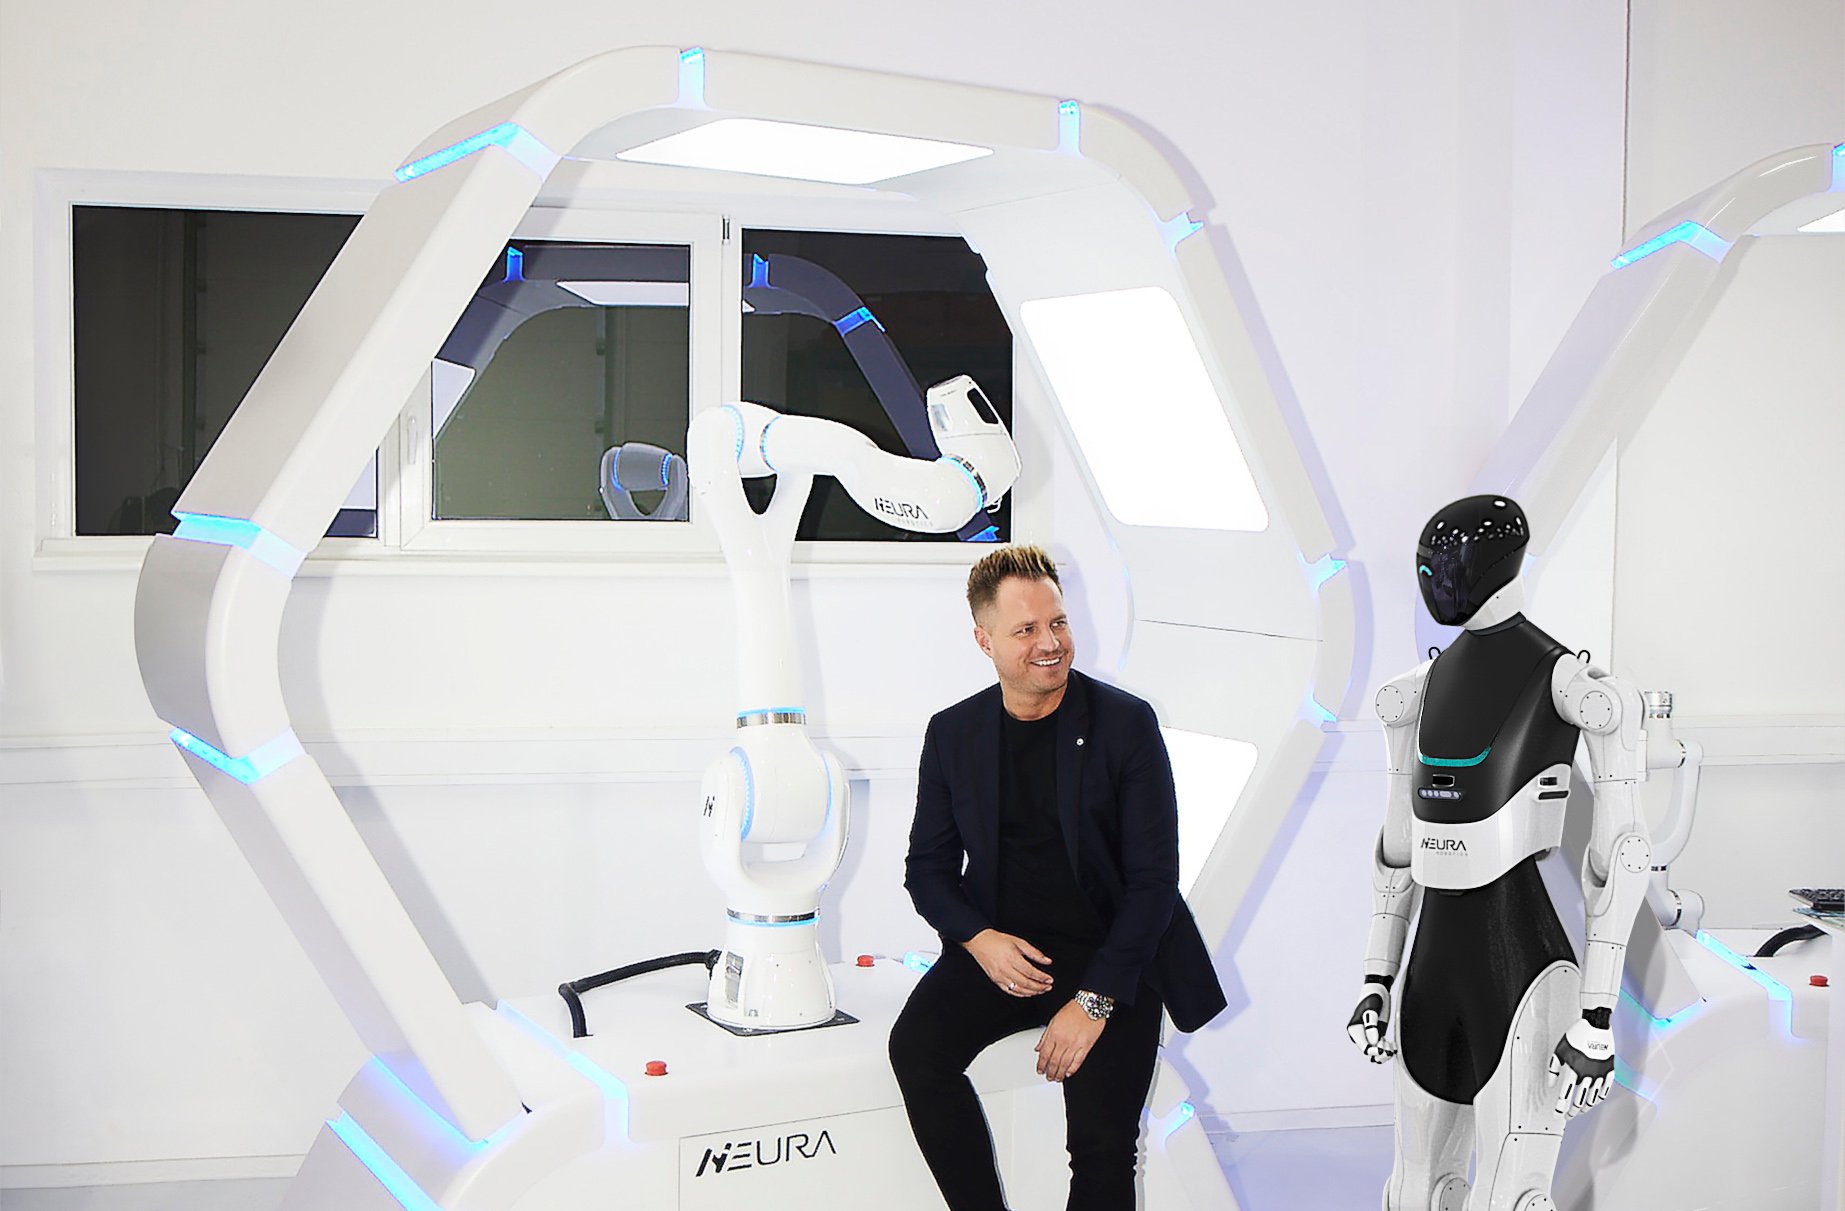 David Reger with cognitive robot MAiRA and humanoid robot 4NE-1